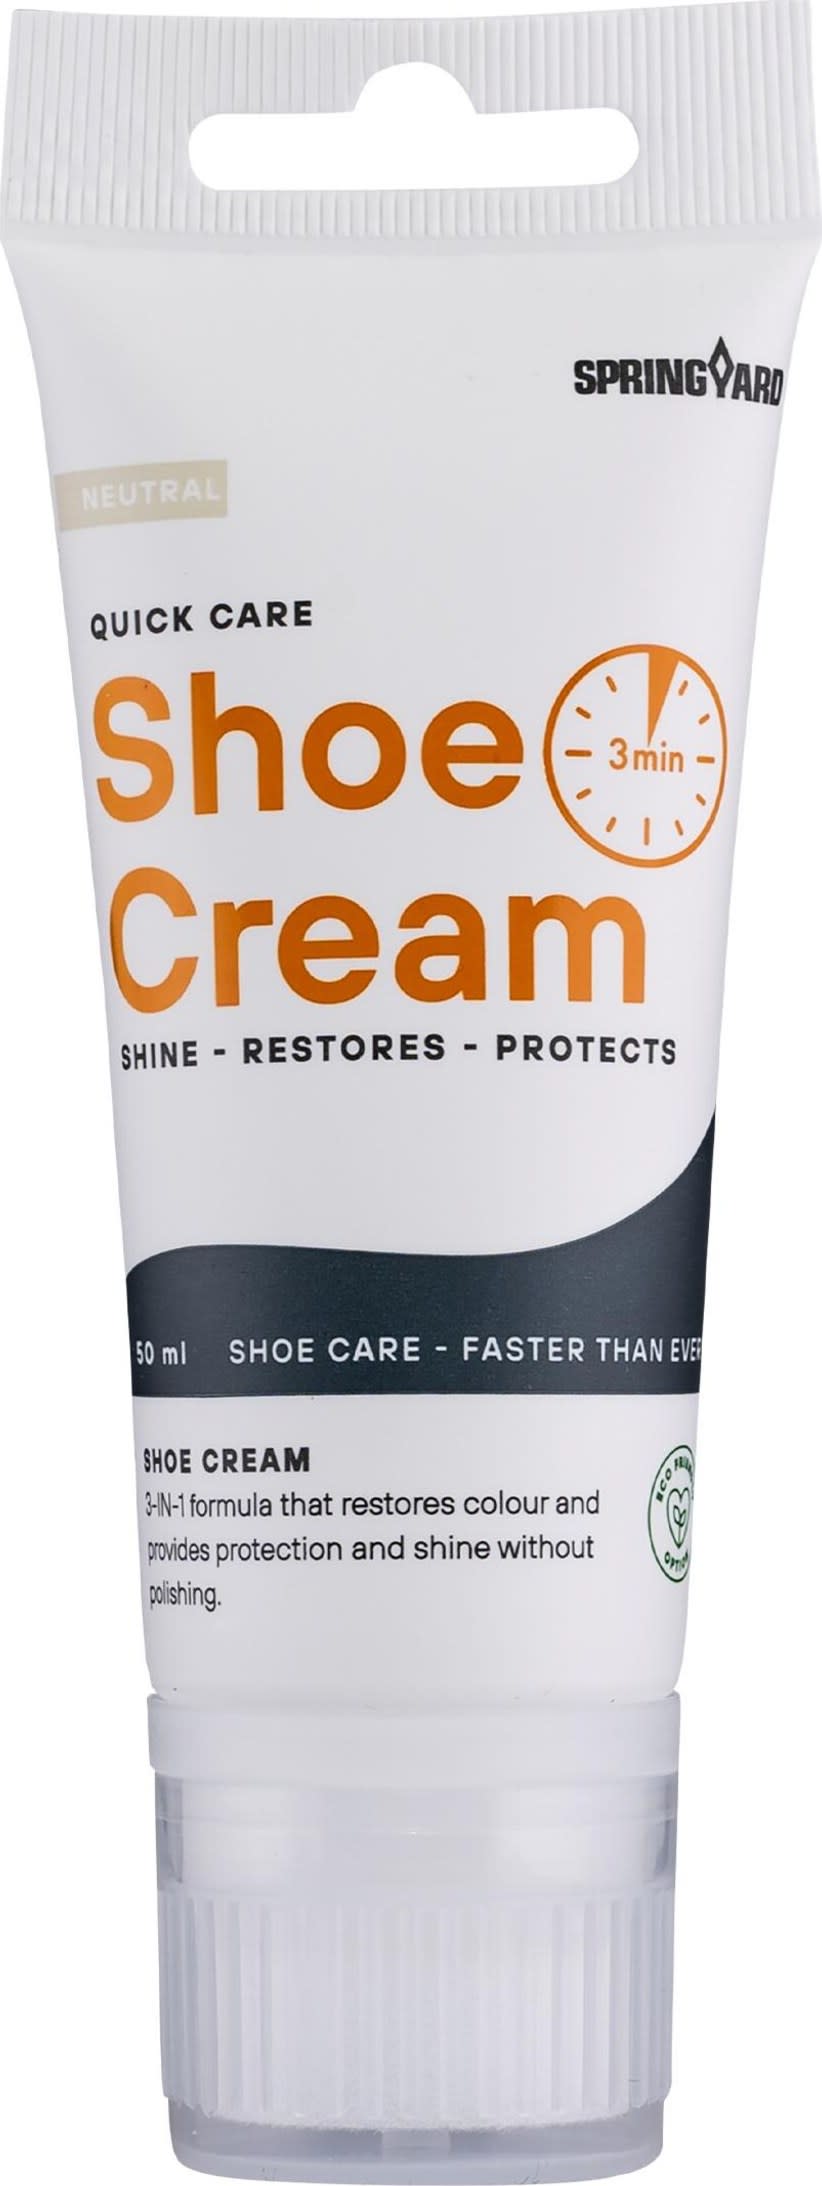 Springyard Shoe Cream Neutral